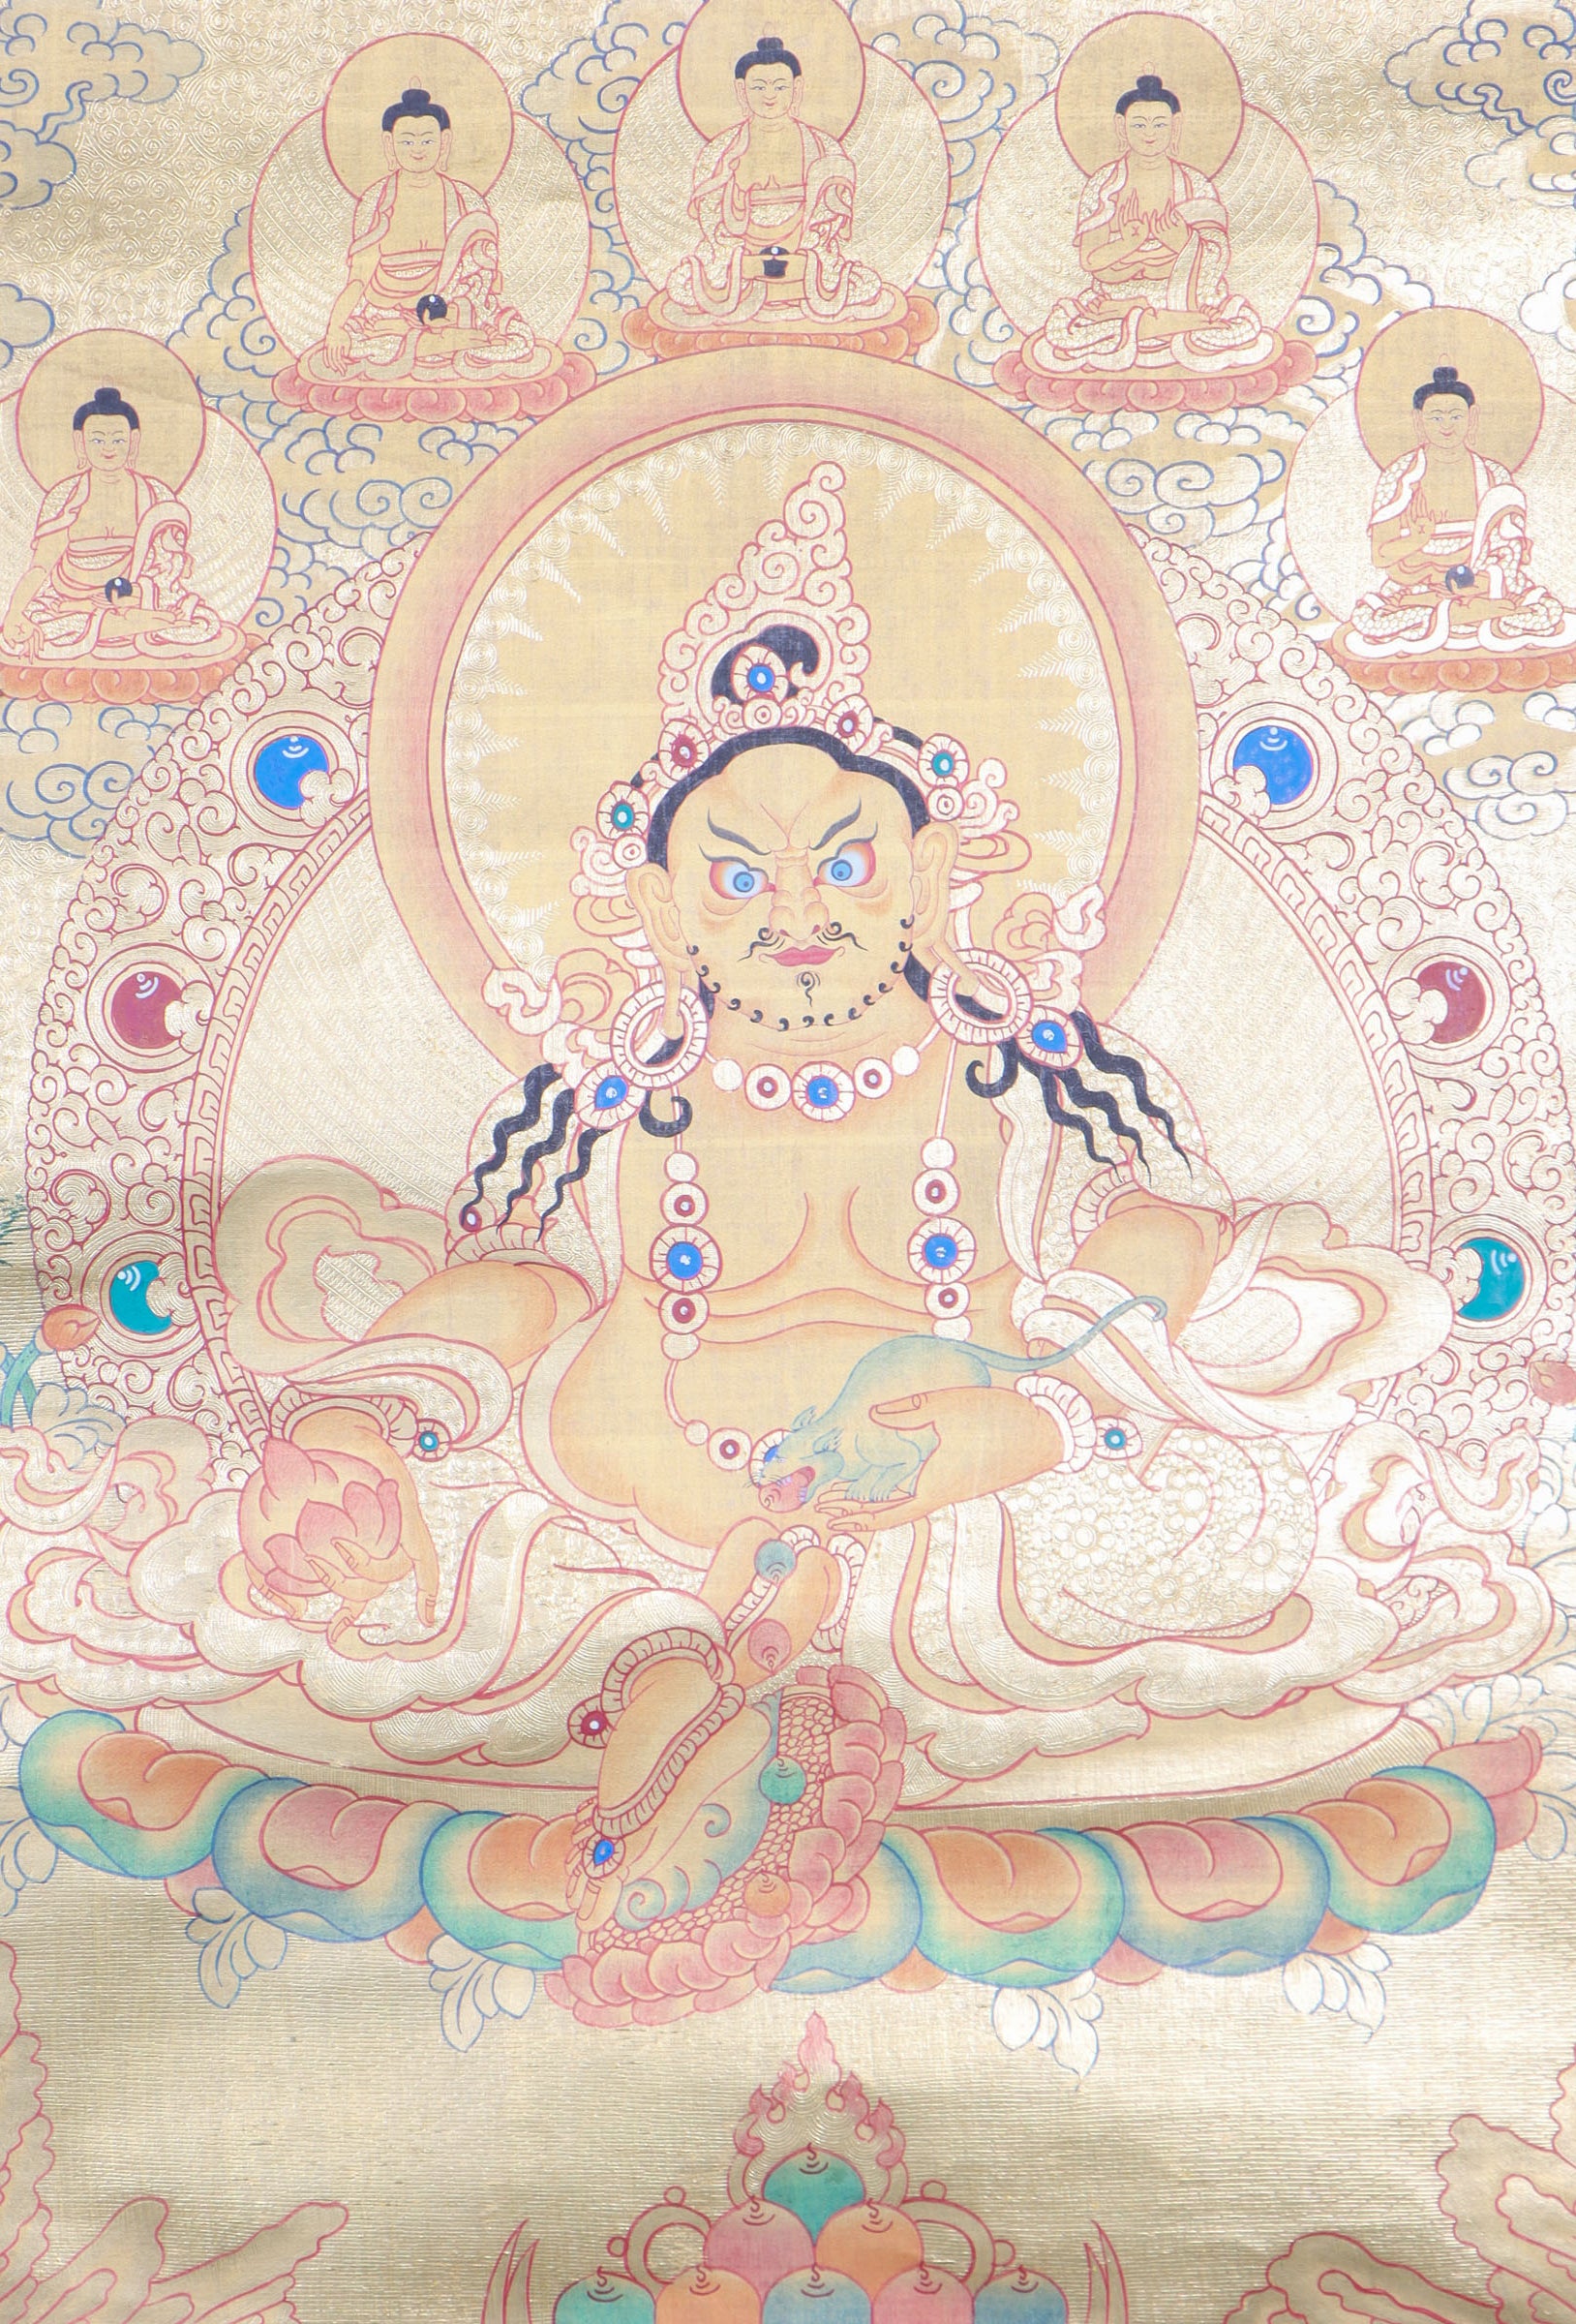 Kuber Thangka Painting for prayer and devotion.